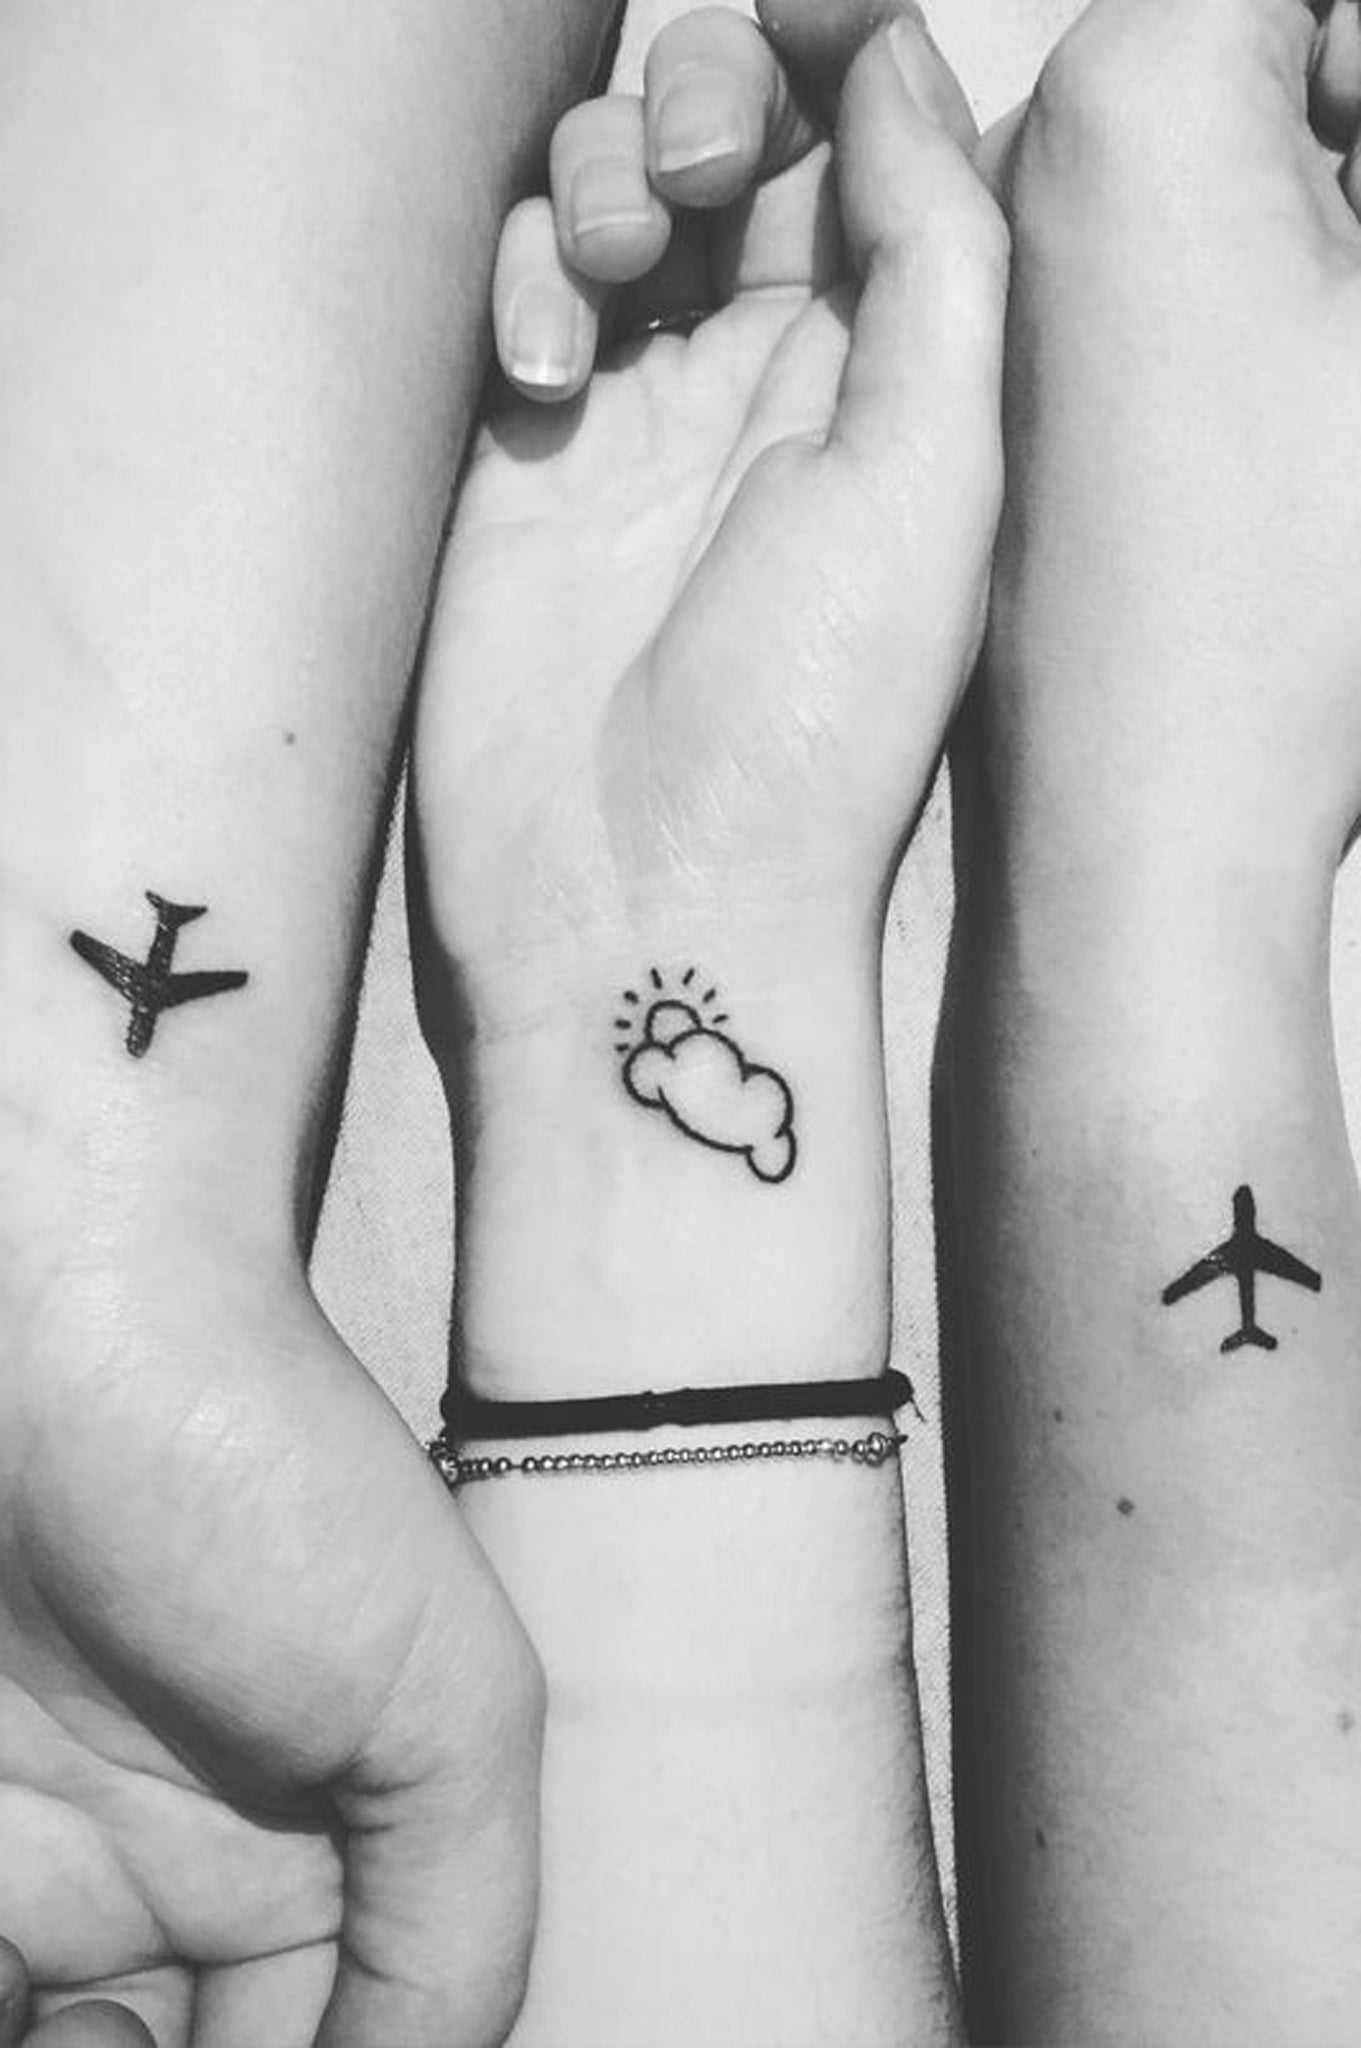 Small Simple Wrist Tattoo Ideas for Travelers - Airplane and Cloud Arm Tatt at MyBodiArt.com